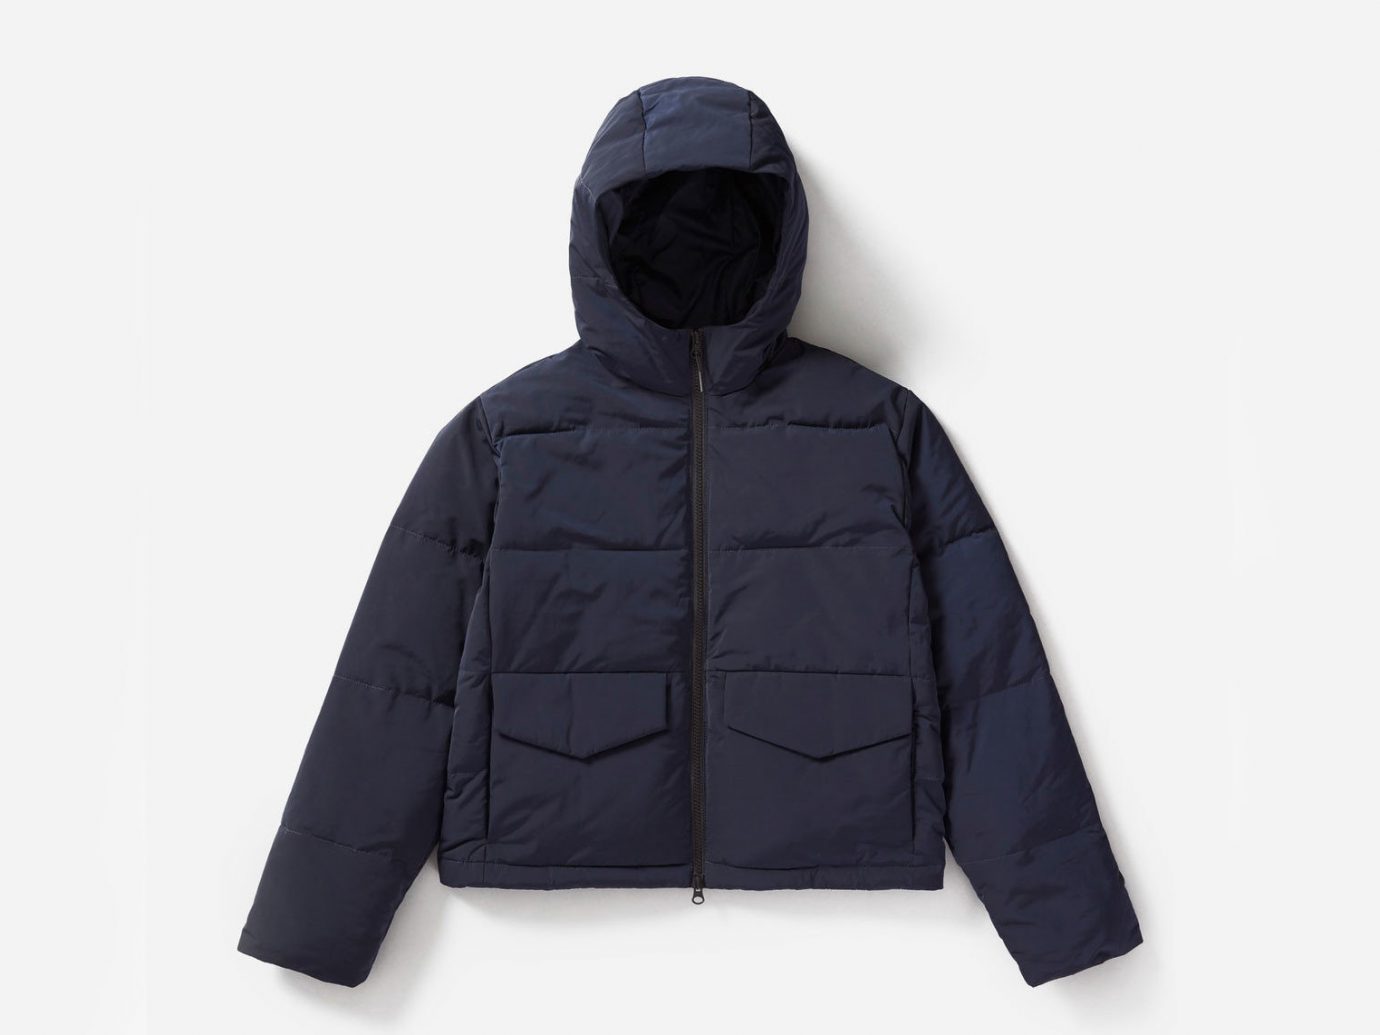 City NYC Style + Design Travel Shop hood jacket clothing product outerwear hoodie sweatshirt product design electric blue polar fleece